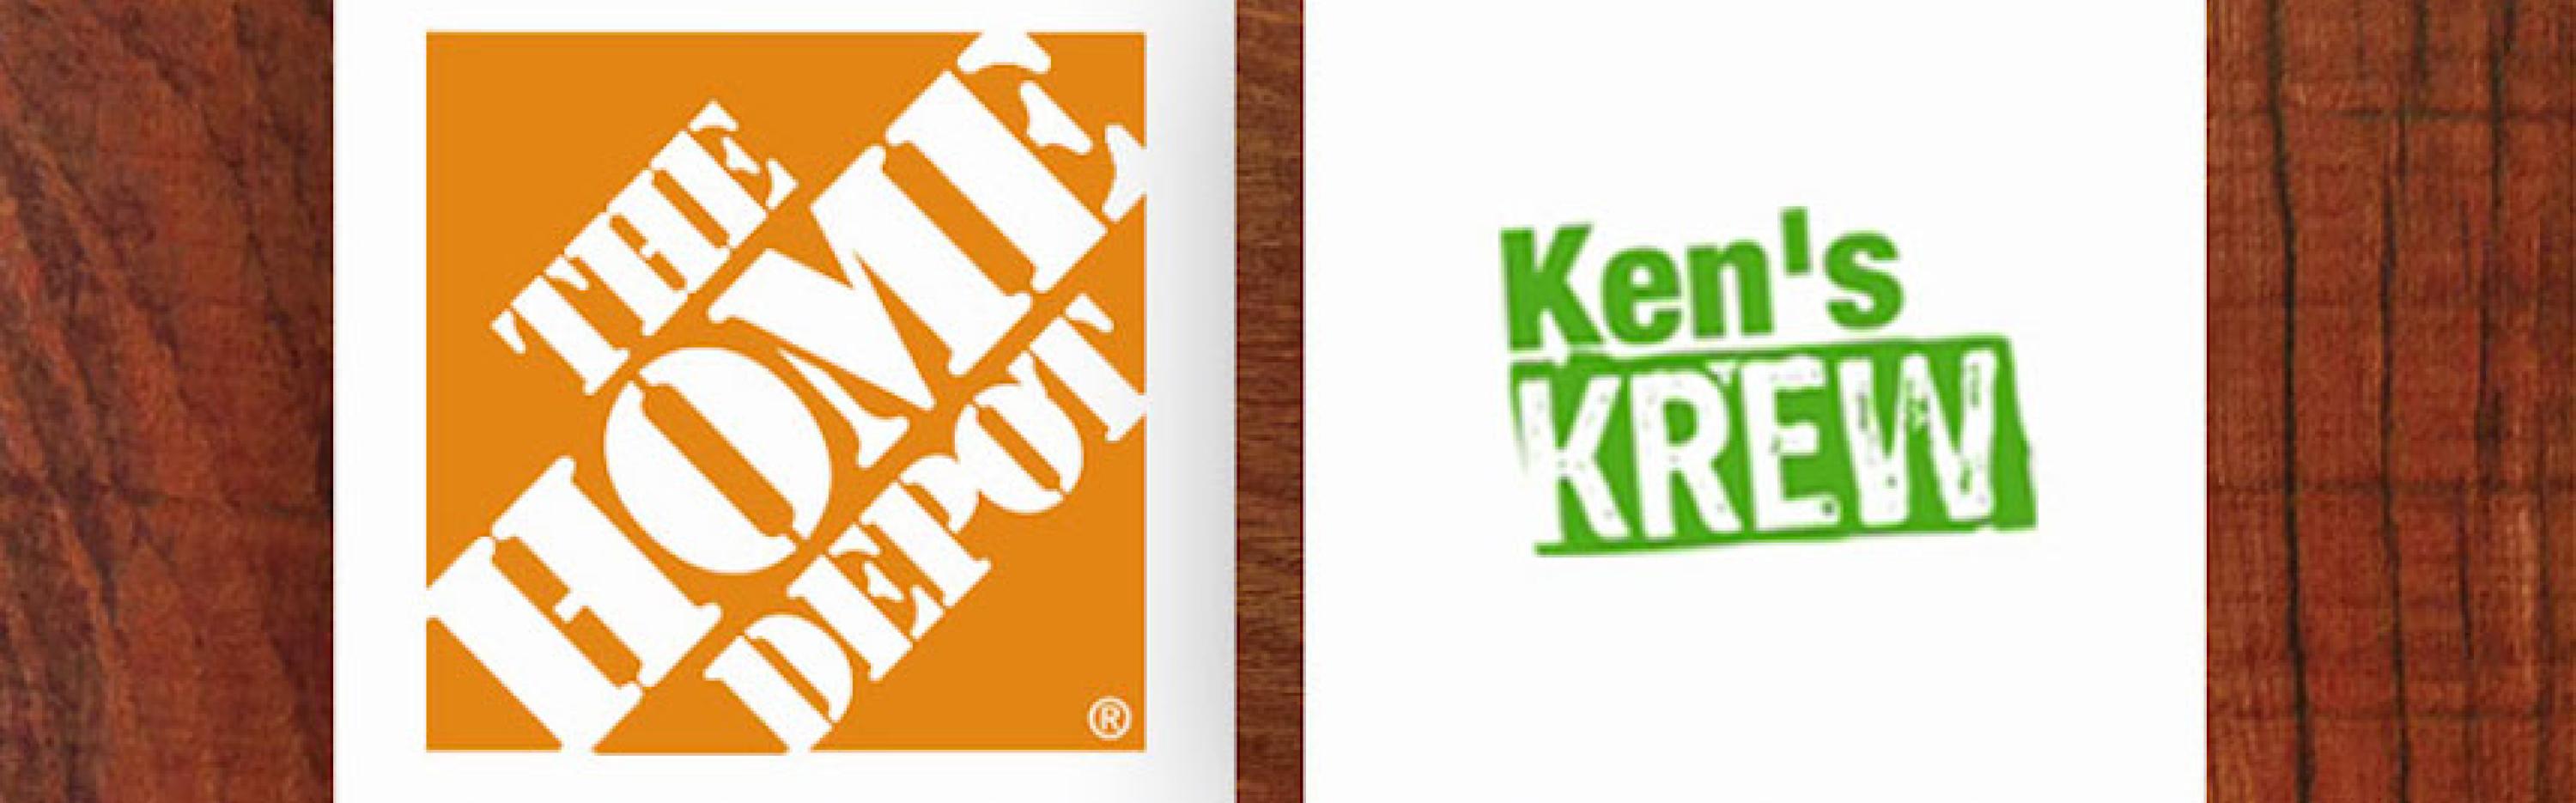 Home Depot and Ken's Krew logos